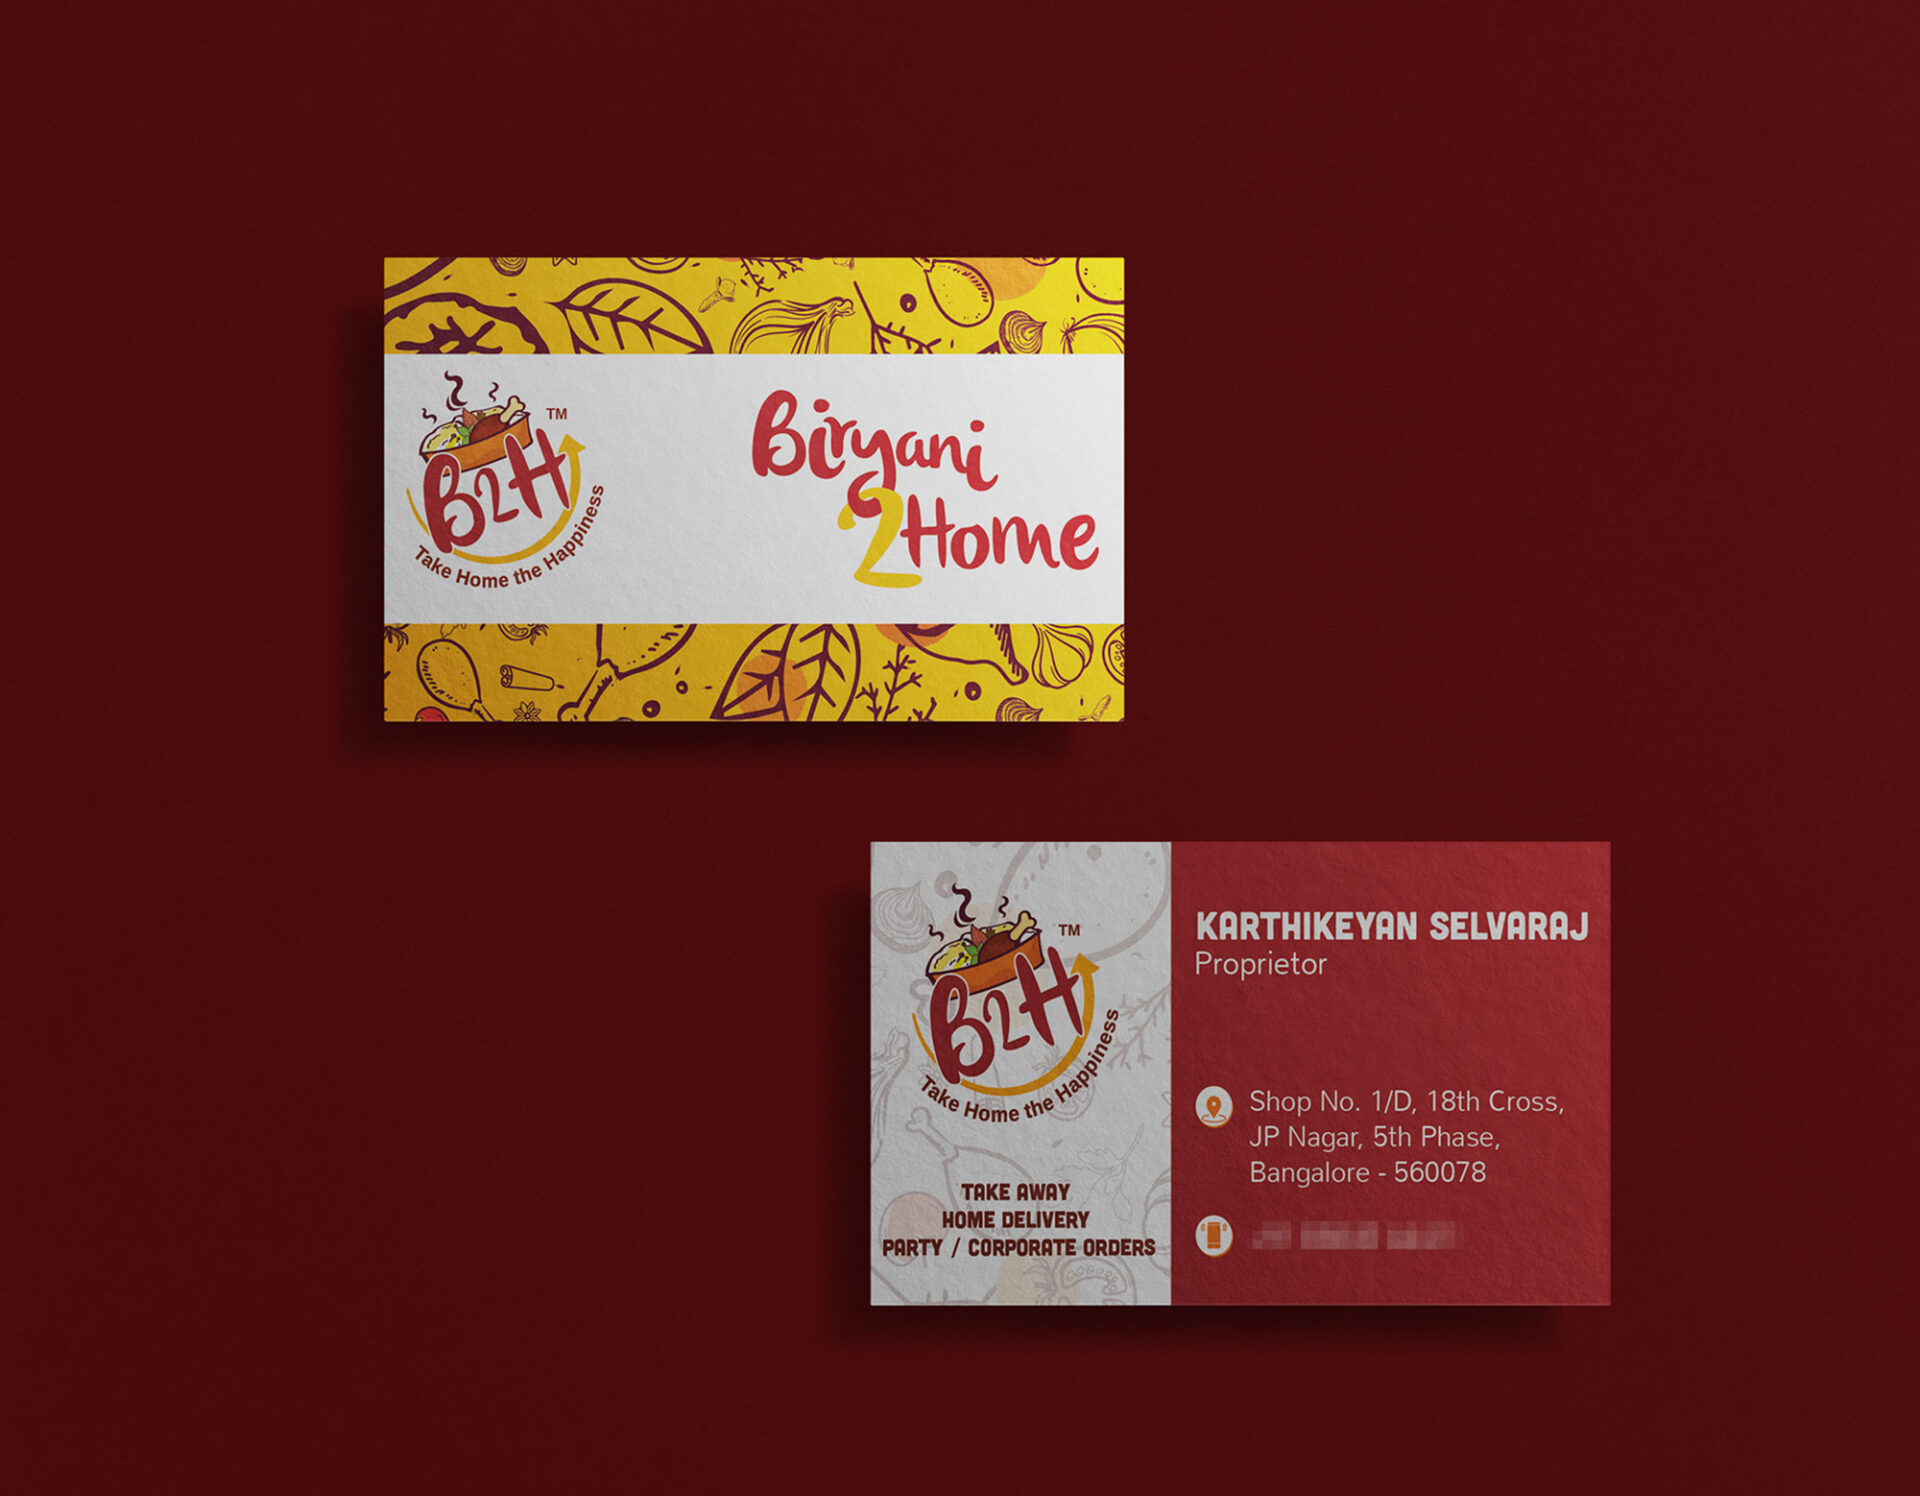 b2h-biriyani2home-menu-card-restaurant-takeaway-biriyani-outlet-brand-strategy-logo-design-business-card-consulting-services-agency-reinaphics-chennai-india